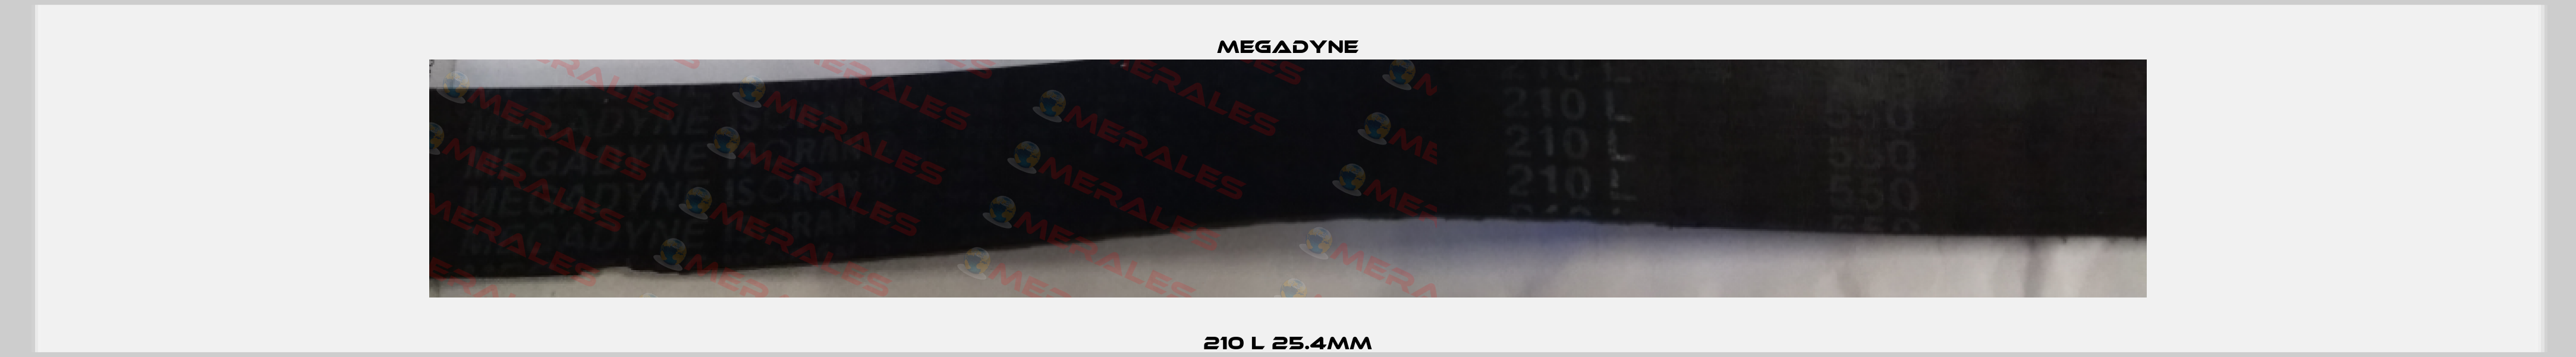 210 L 25.4mm Megadyne